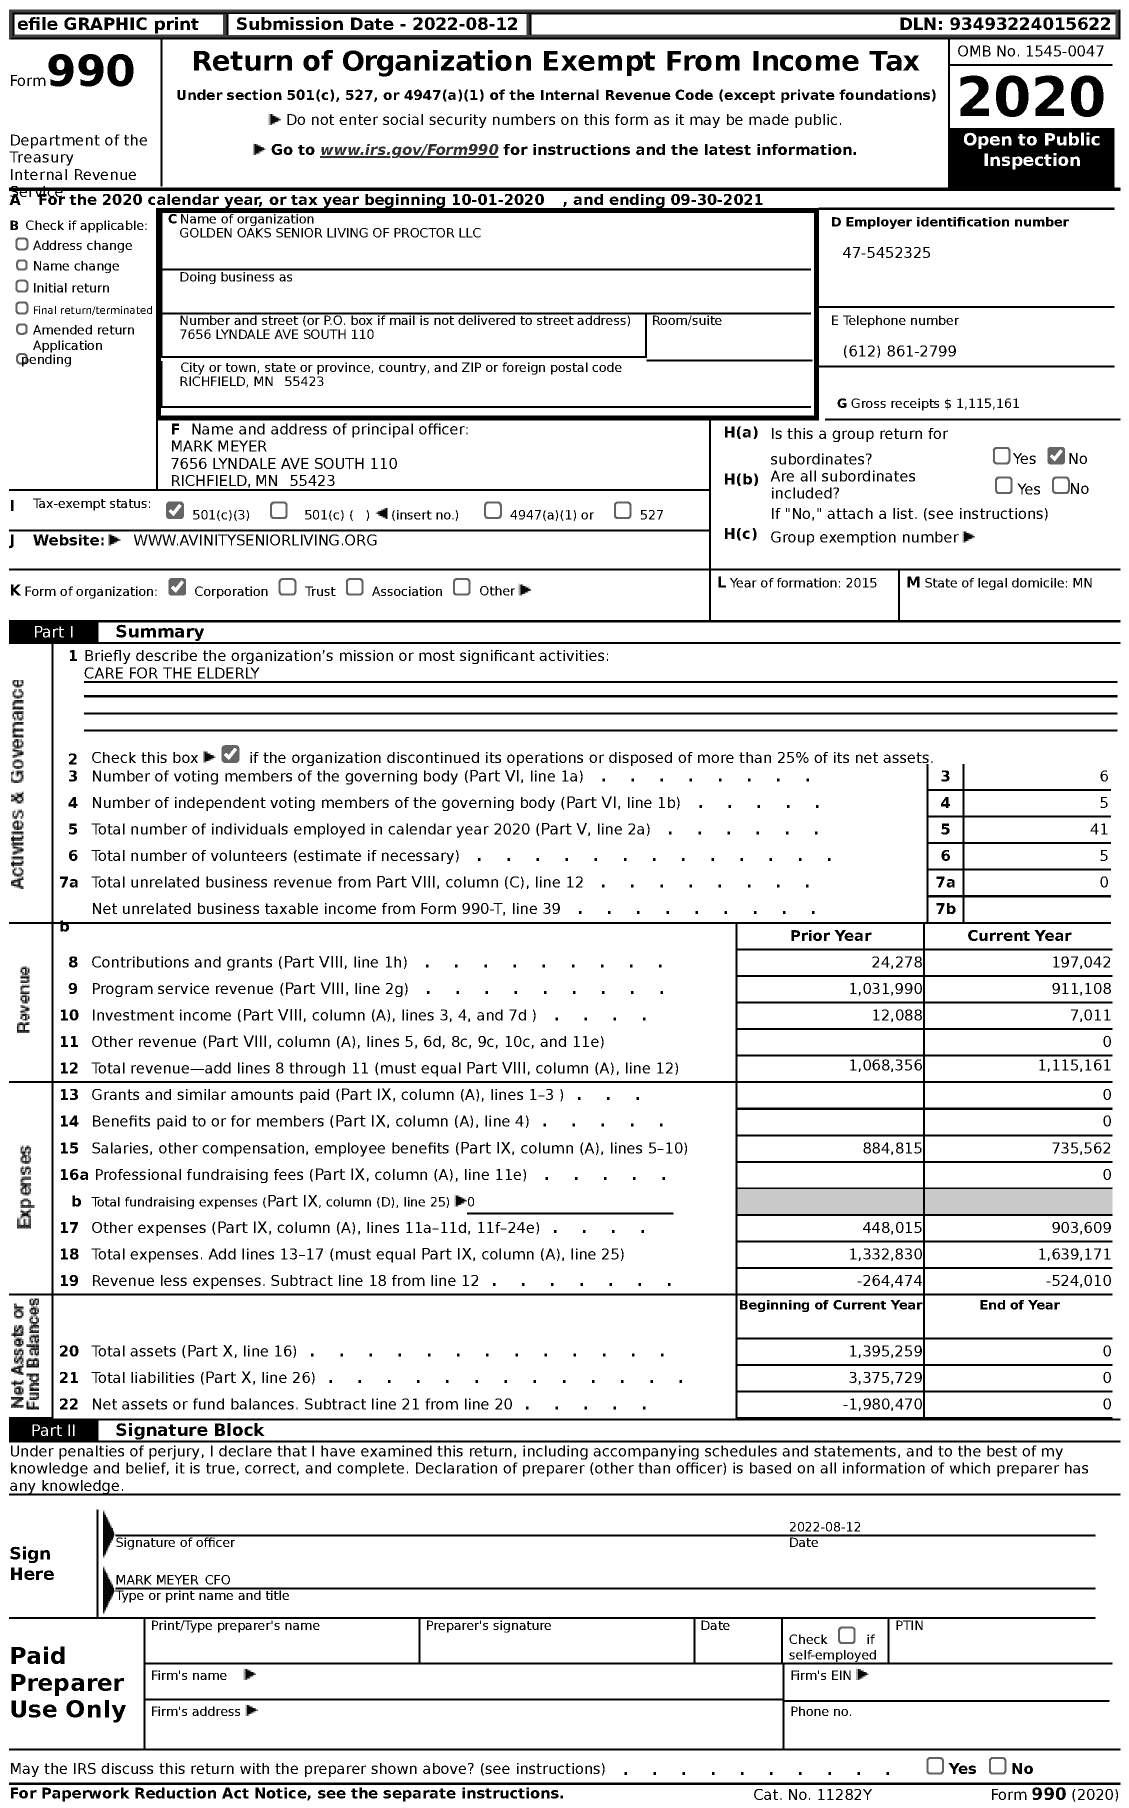 Image of first page of 2020 Form 990 for Golden Oaks Senior Living of Proctor LLC